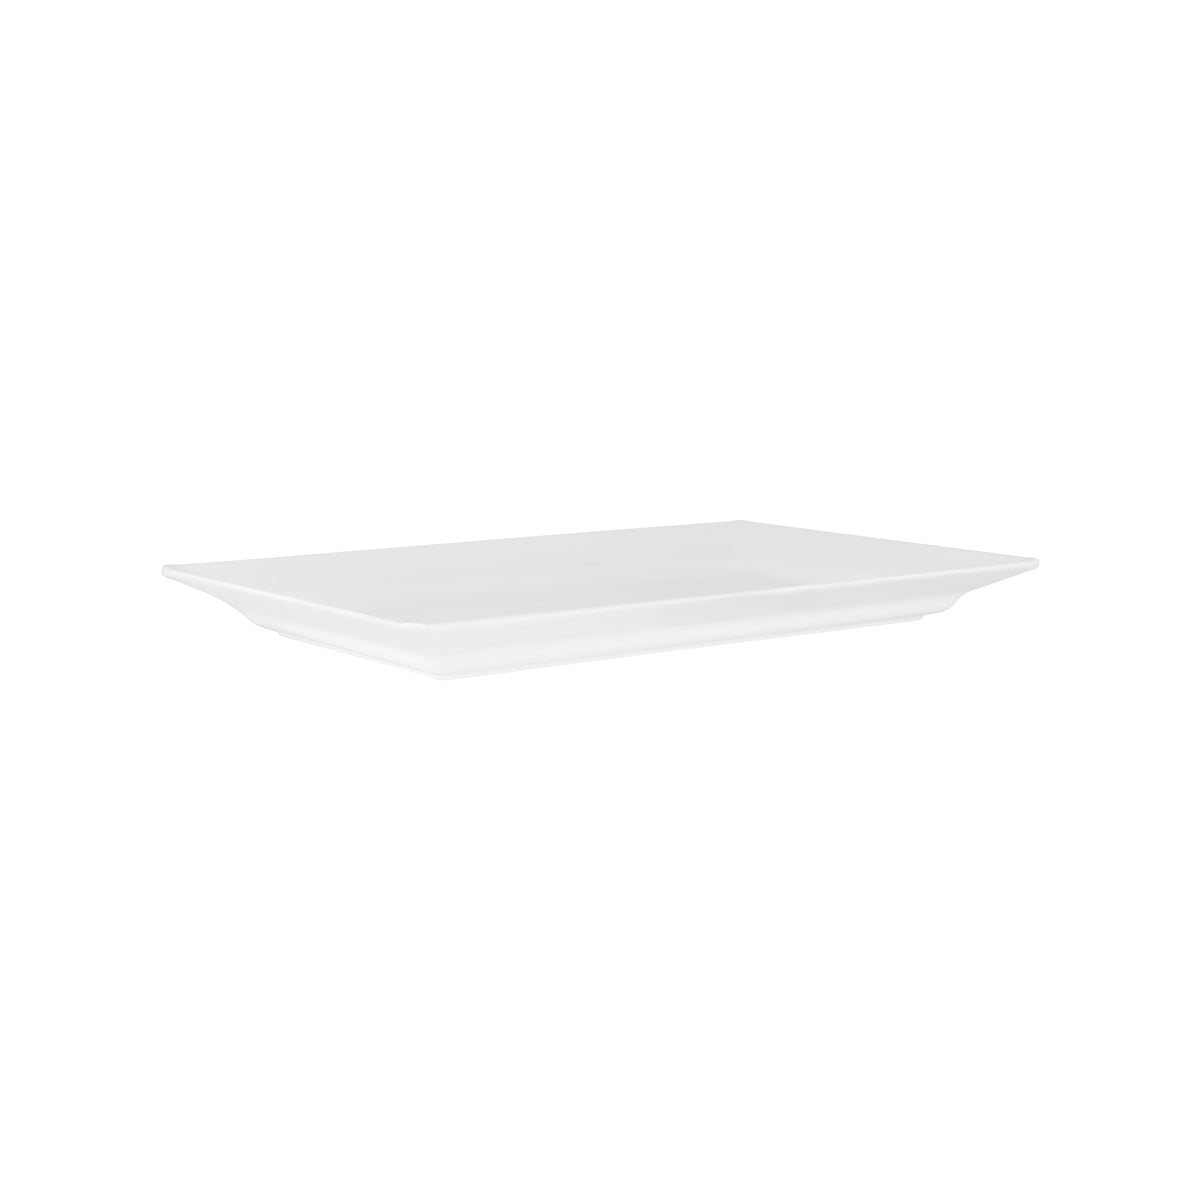 49316 Superware White Rectangular Platter Raised Sides 440x270mm Tomkin Australia Hospitality Supplies